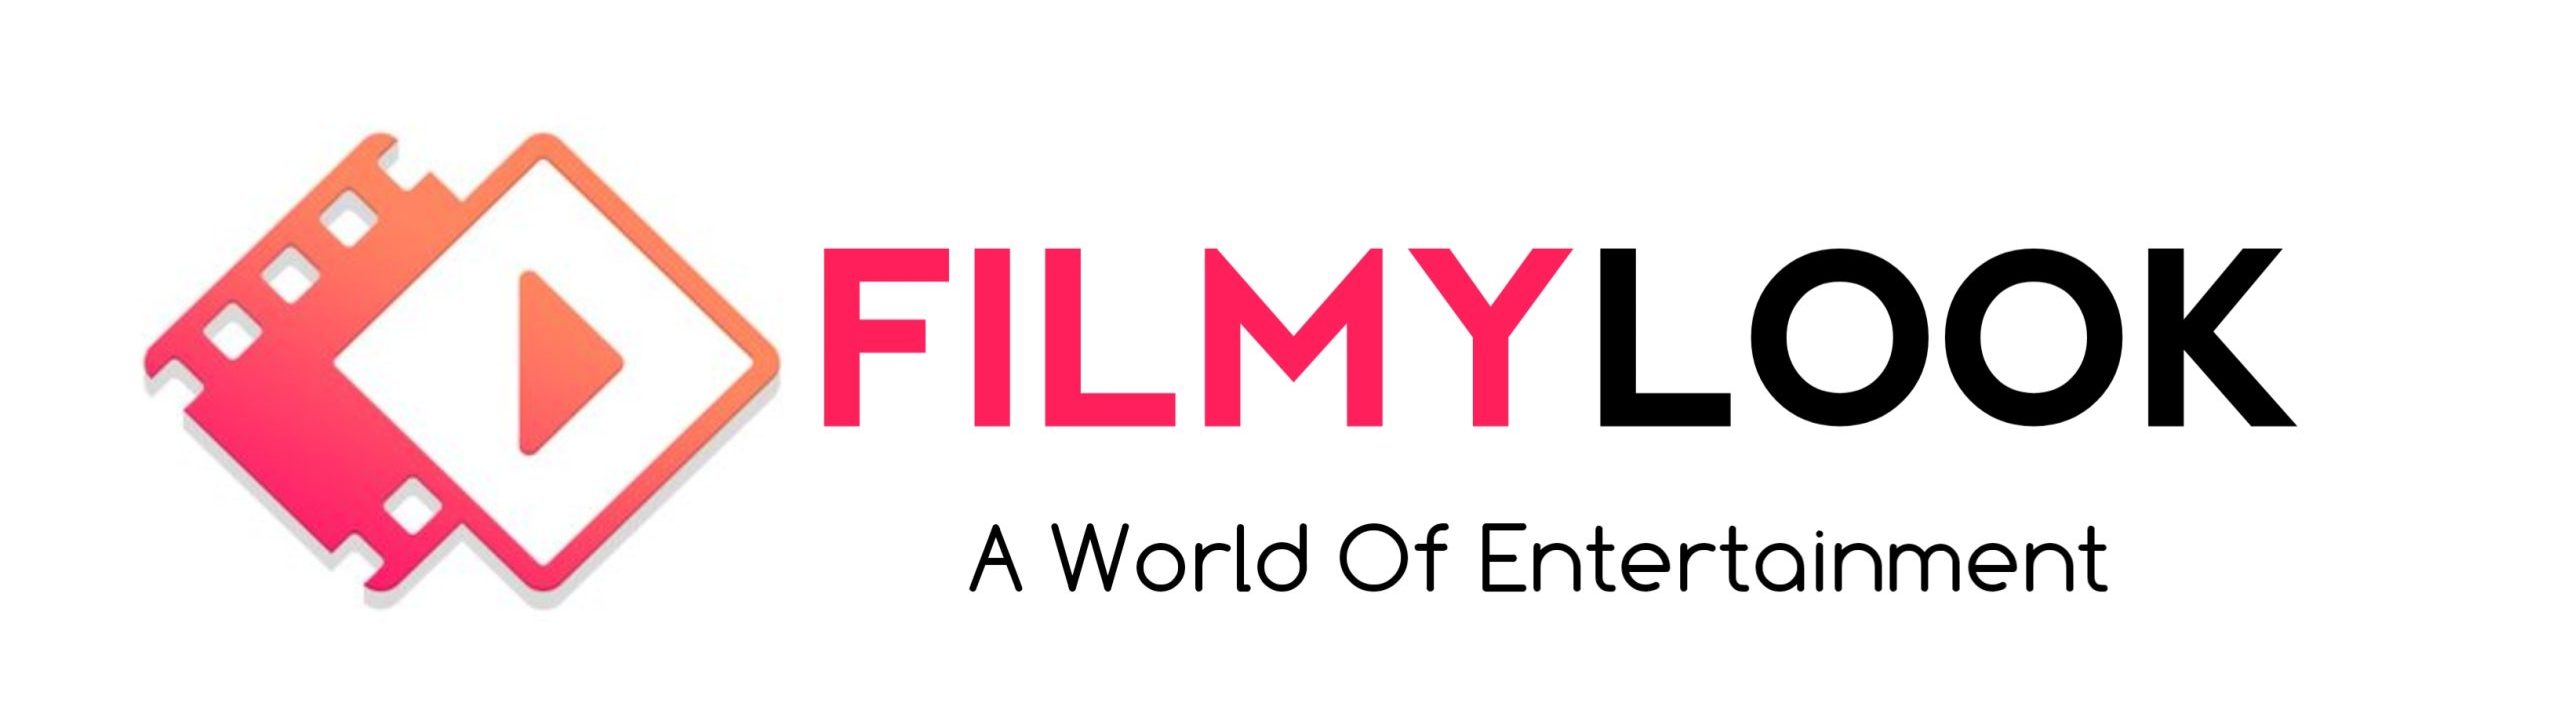 Filmylook – Get Every Entertainment News